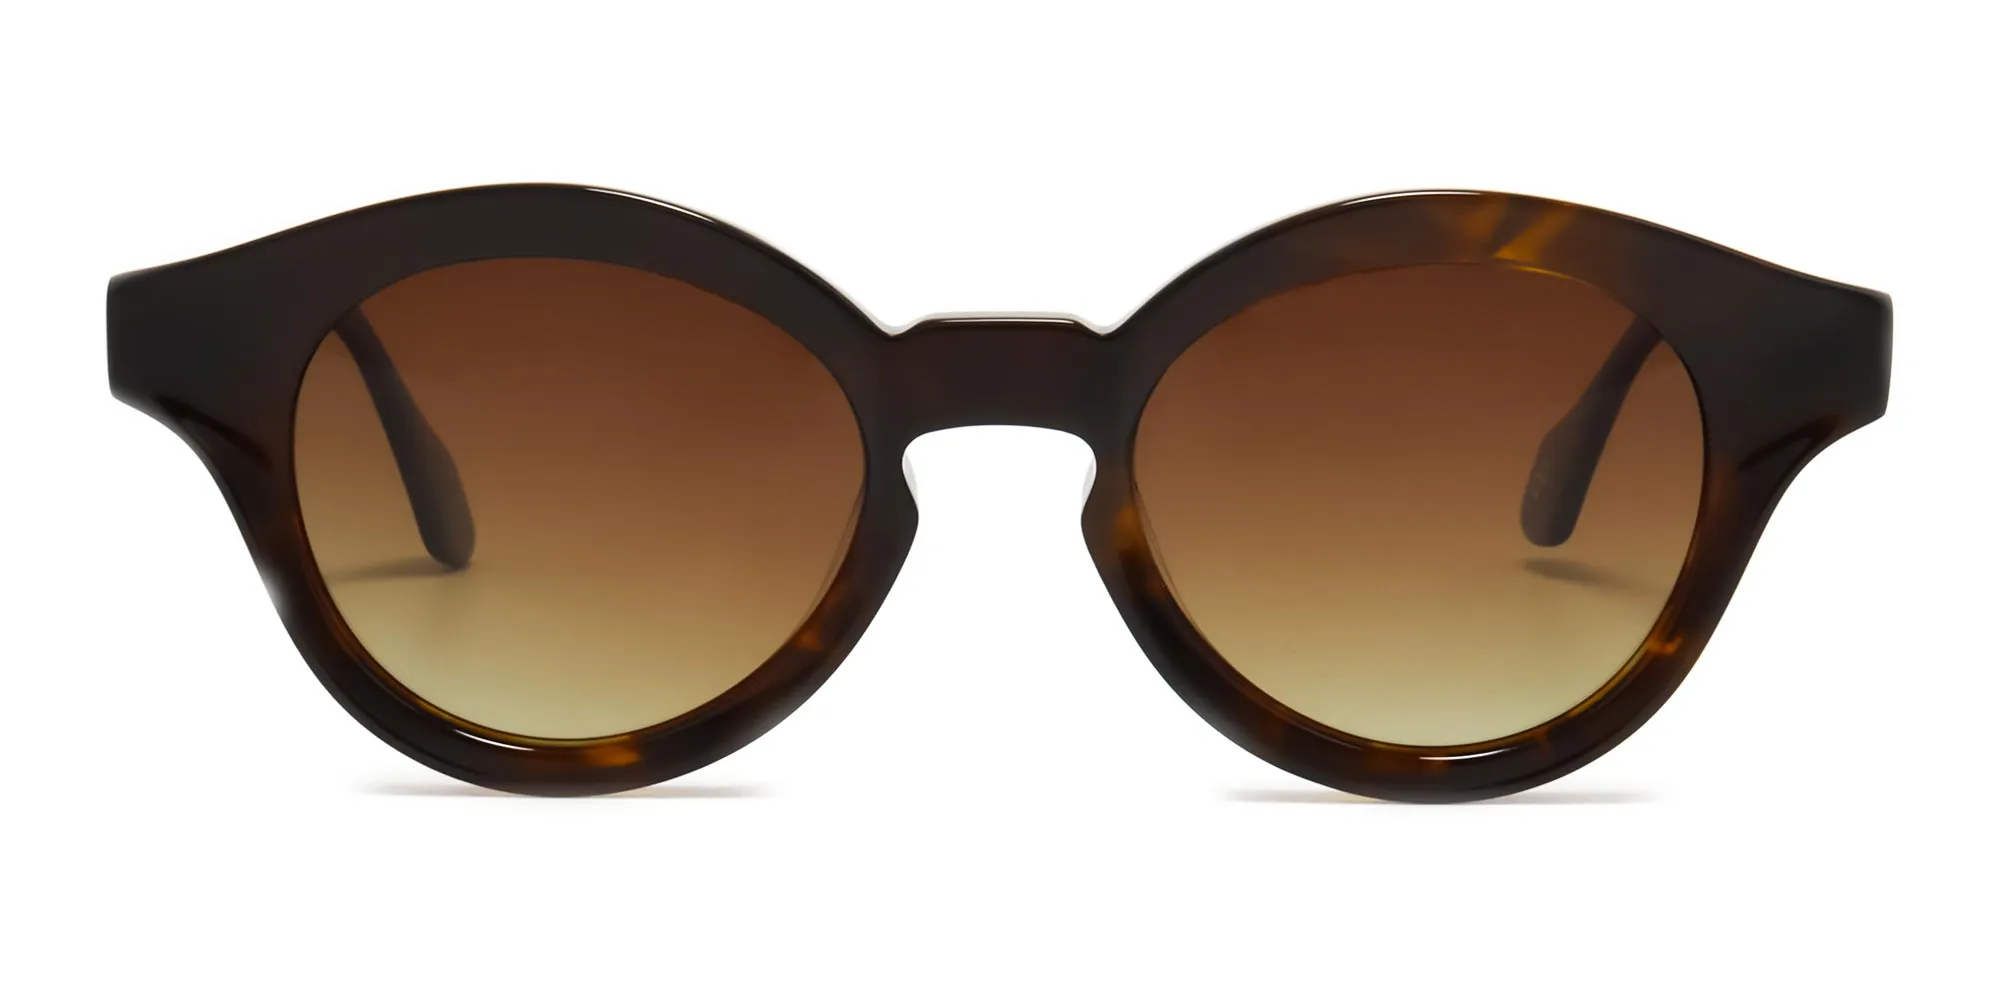 Women's Sunglasses | Stylish Ladies Sunnies UK | Specscart